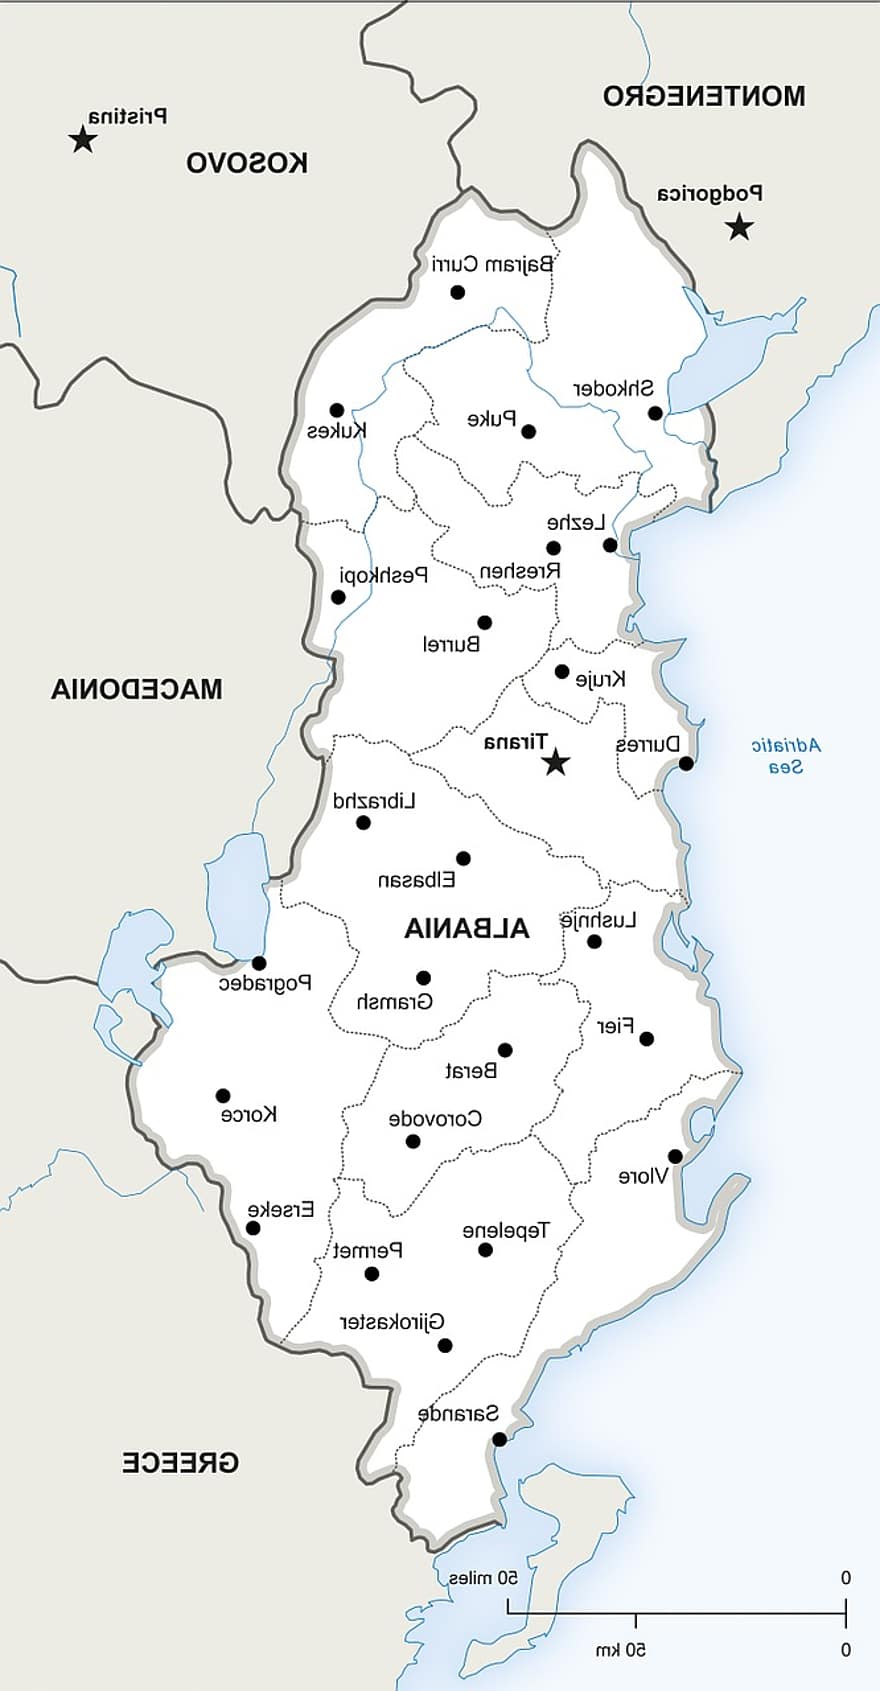 polític, mapa, Albània, geografia, país, mapes, europa, precisa, ciutats, ciutat